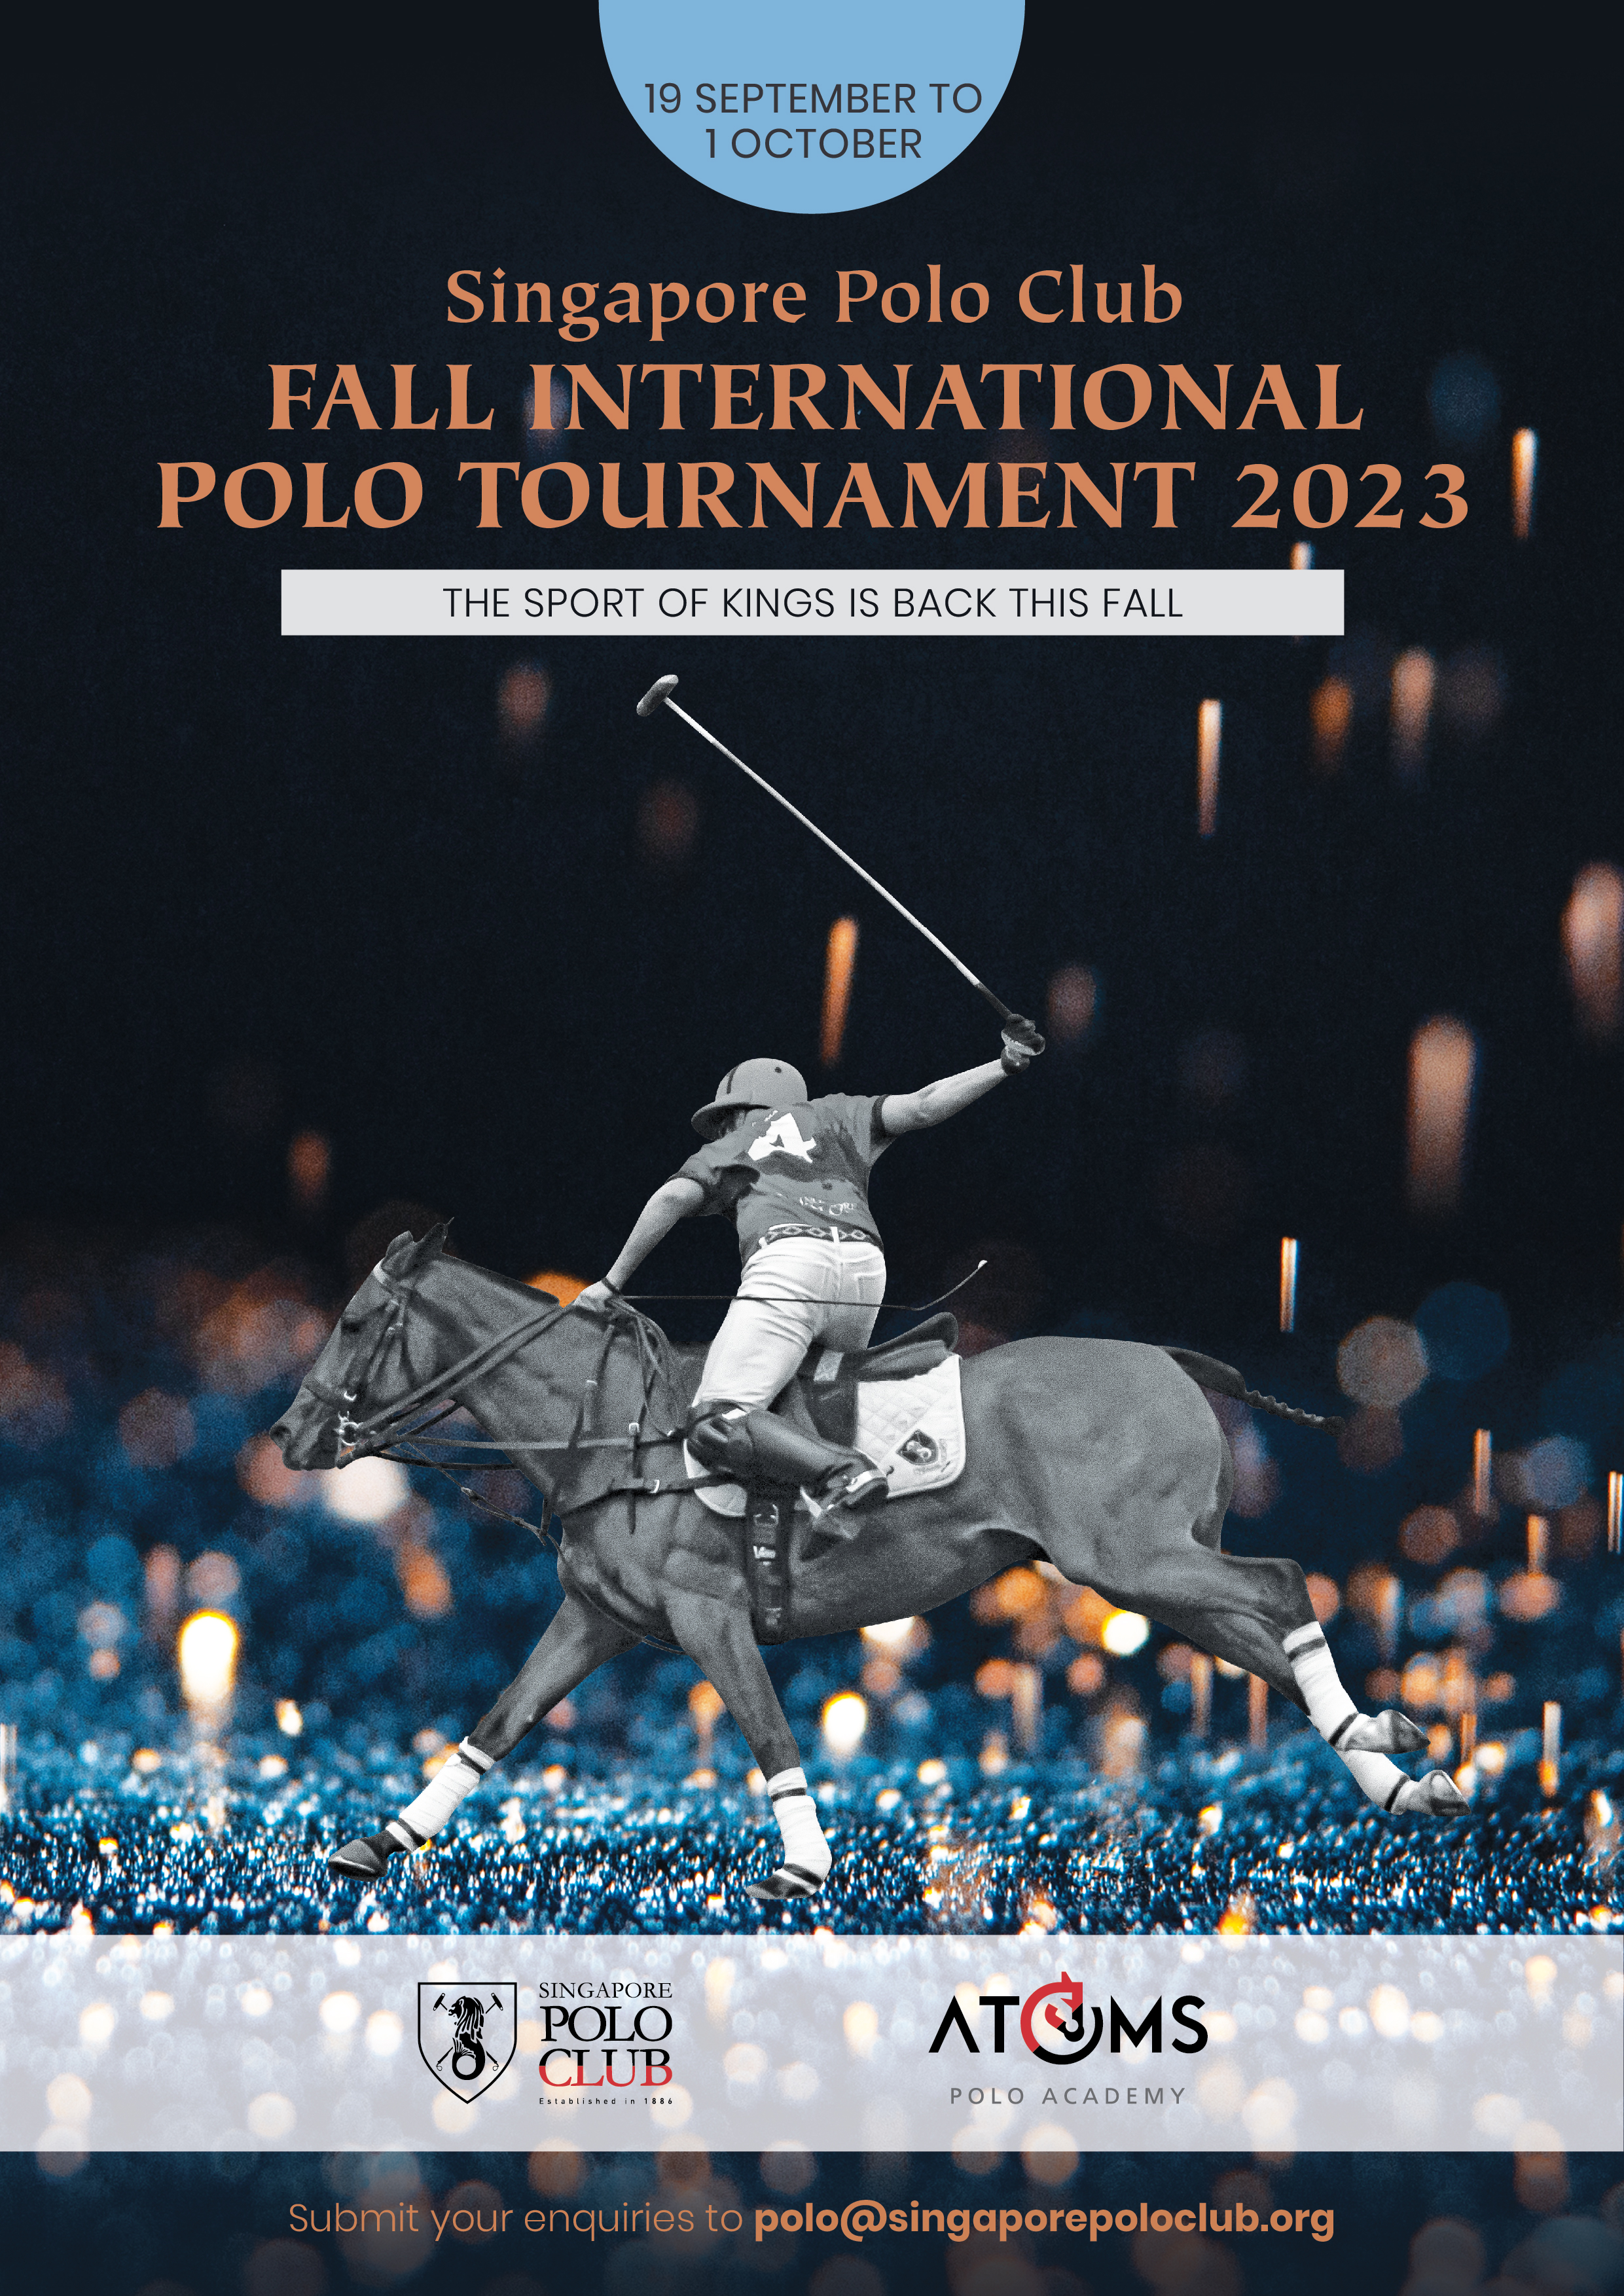 Fall International Polo Tournament 2023